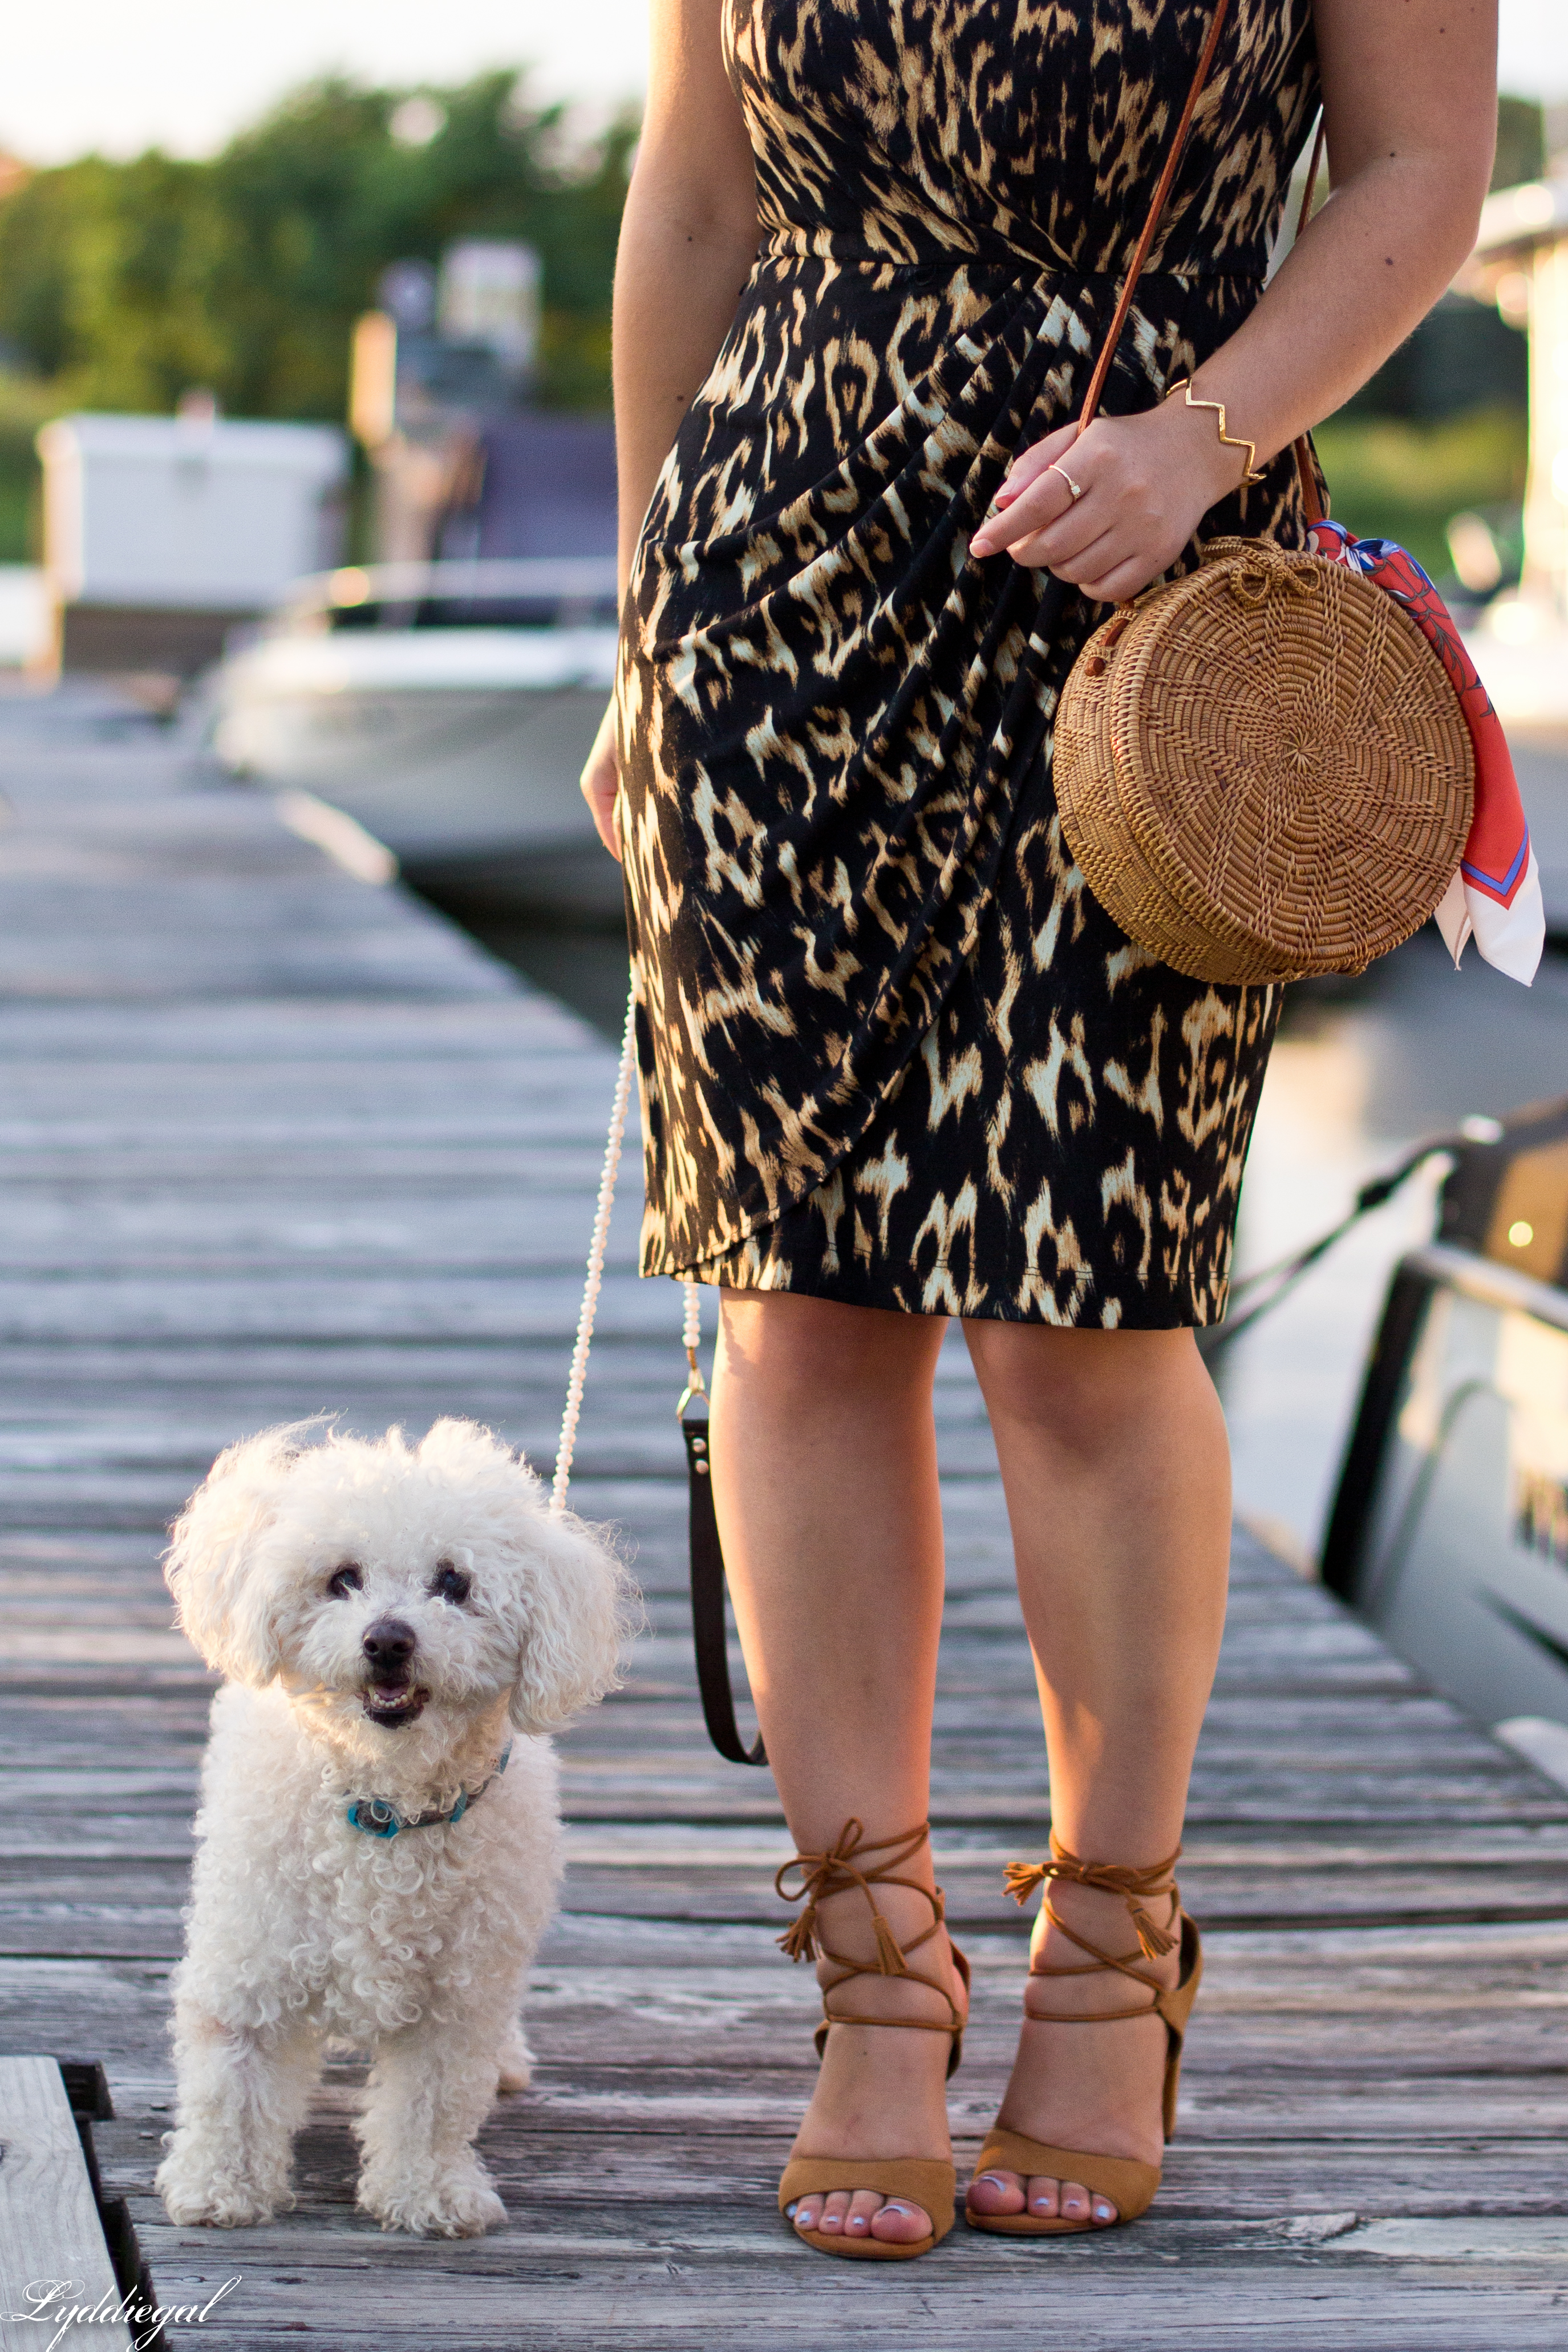 leopard sheath dress, round rattan bag, dog walking-2.jpg